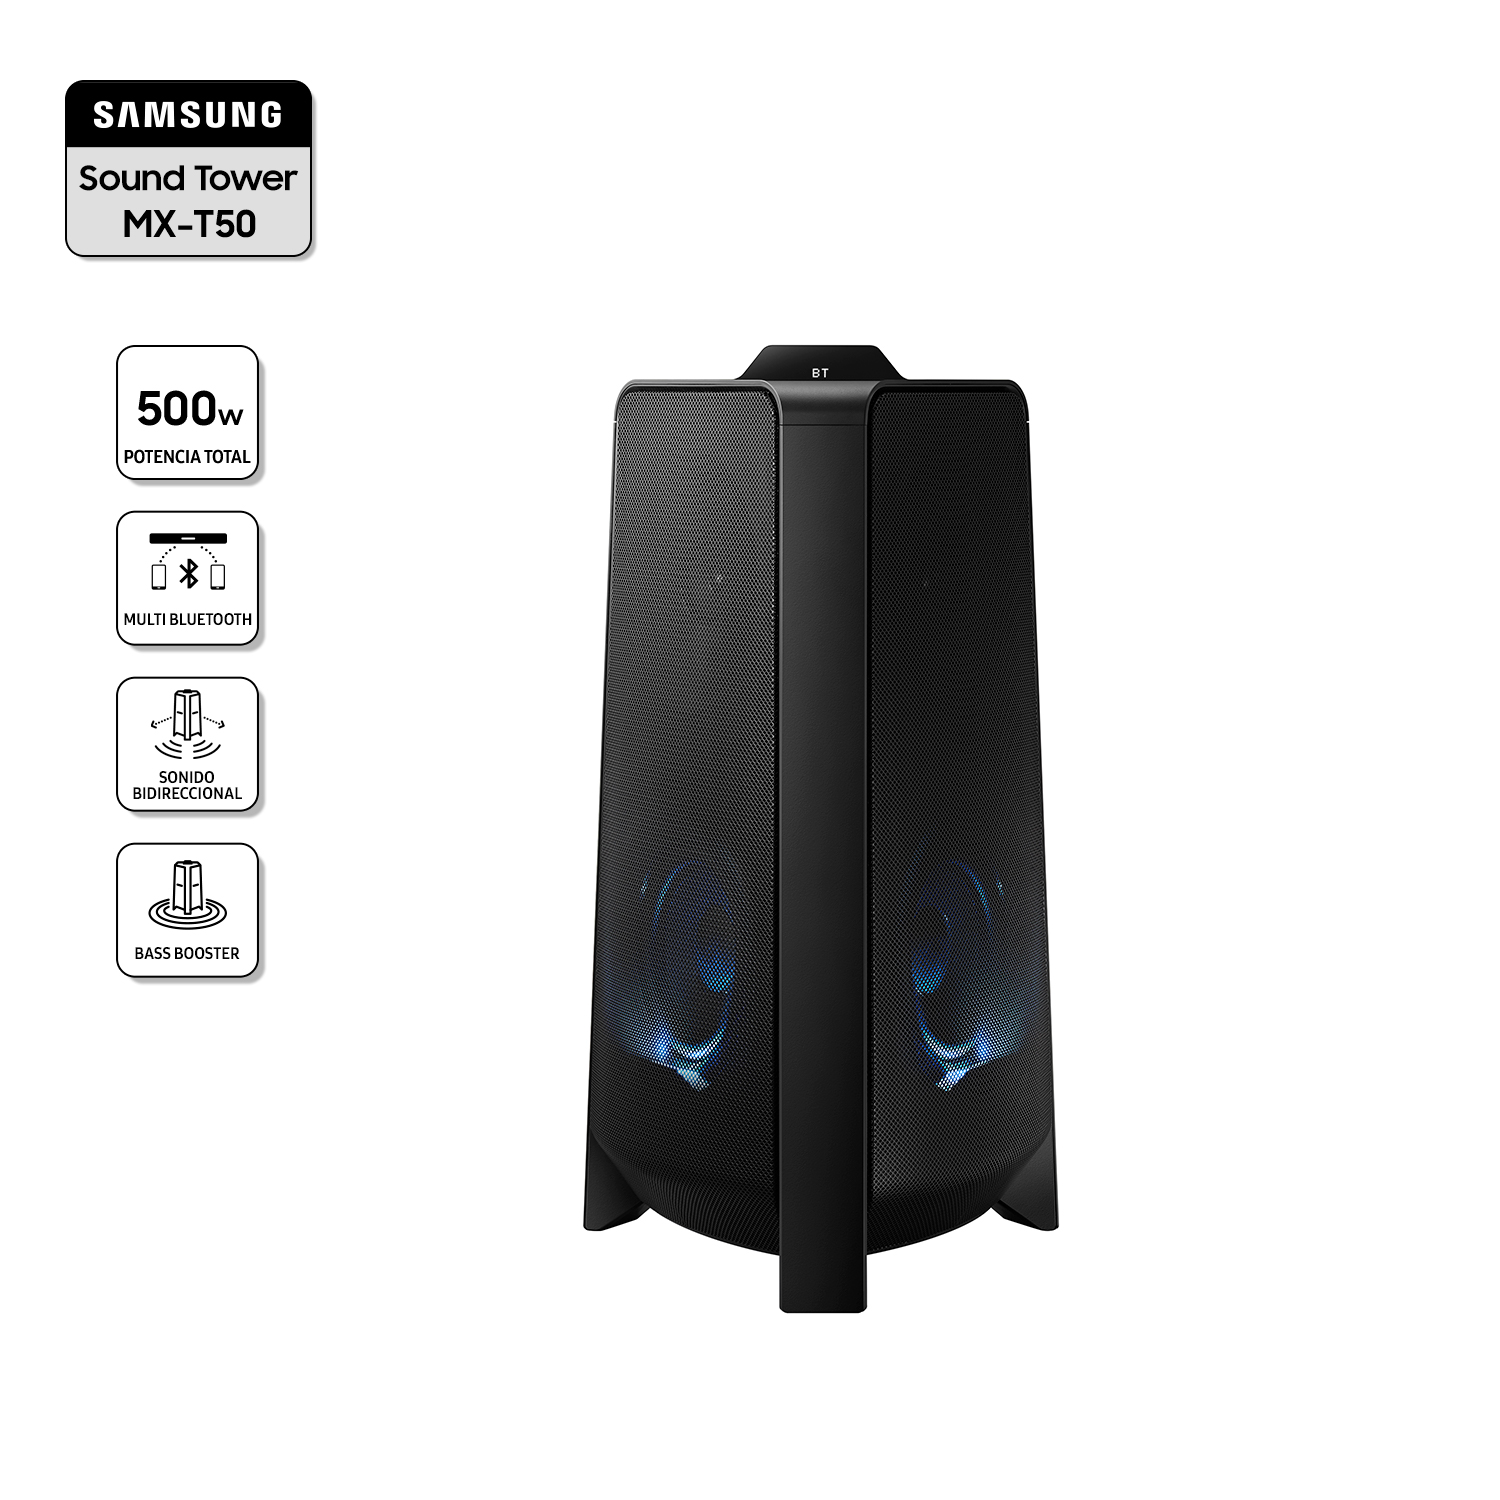 Minicomponente Samsung Sound Tower MX-T50/ZS en Oferta